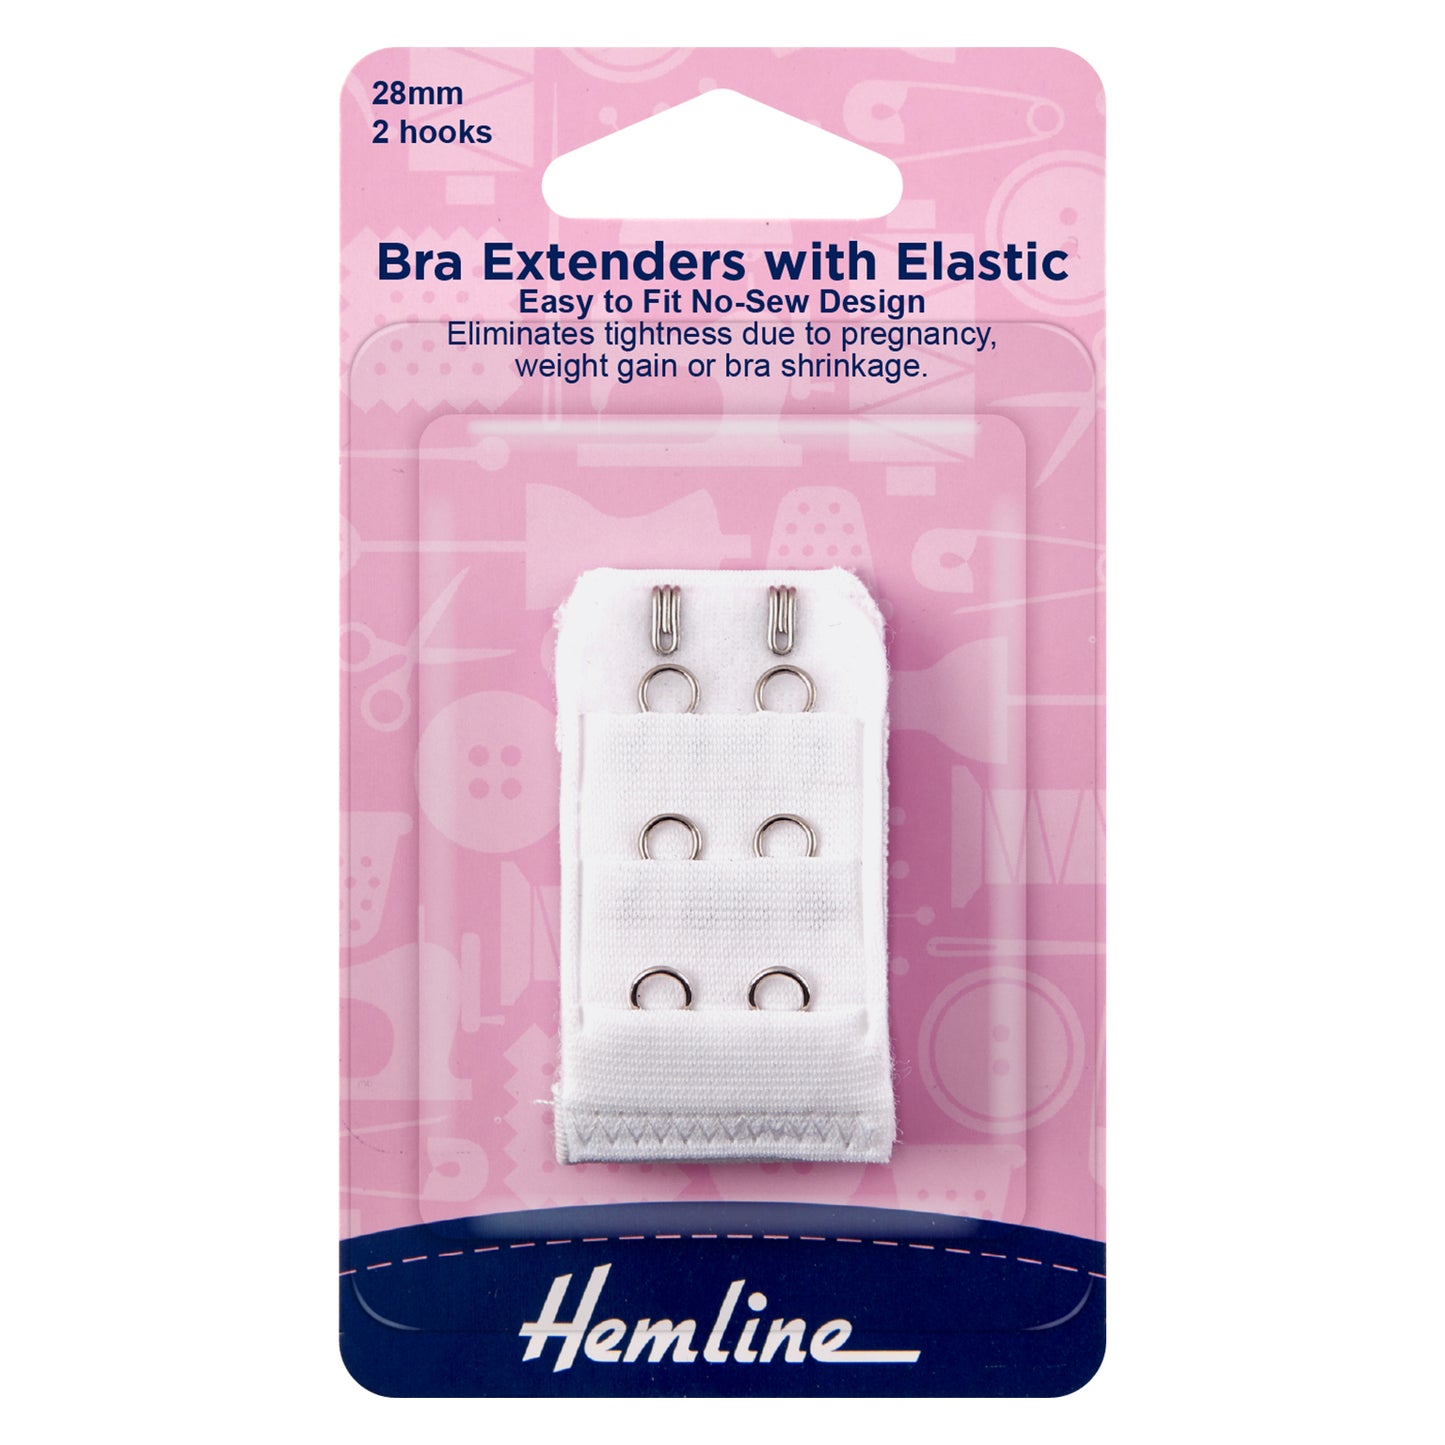 Bra Extenders with Elastic 28mm, 2 Hooks